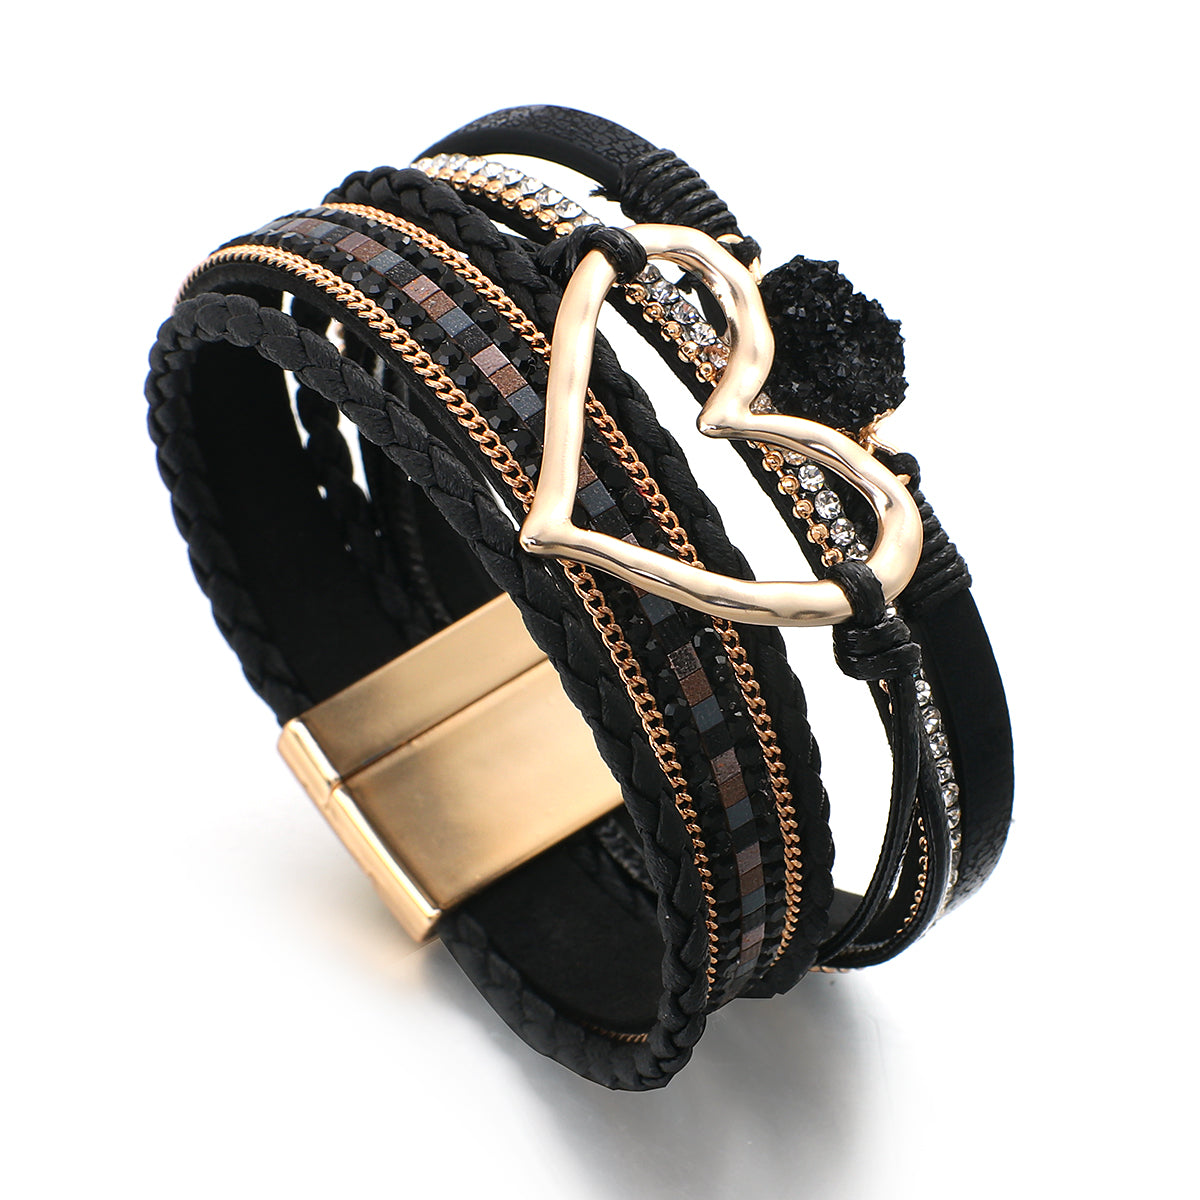 'Dalgu' Heart Charm Cuff Bracelet - black | Allora Jade